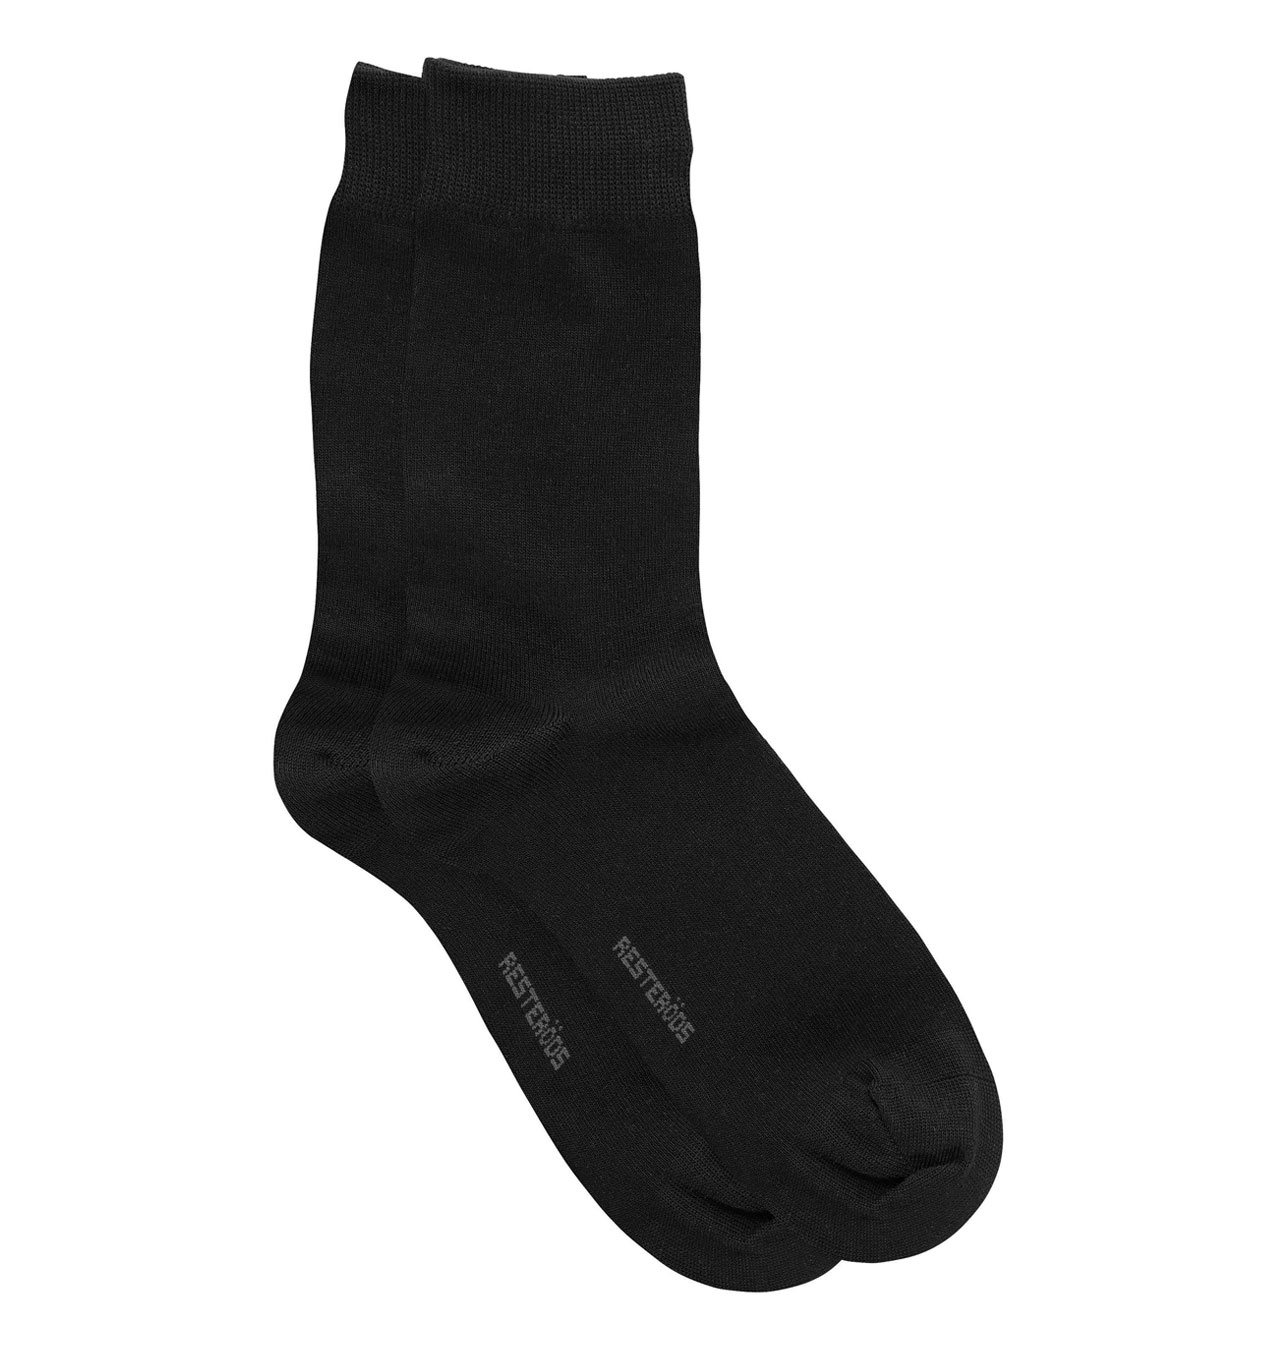 Resteröds - Bamboo Socks 5-pack - Black